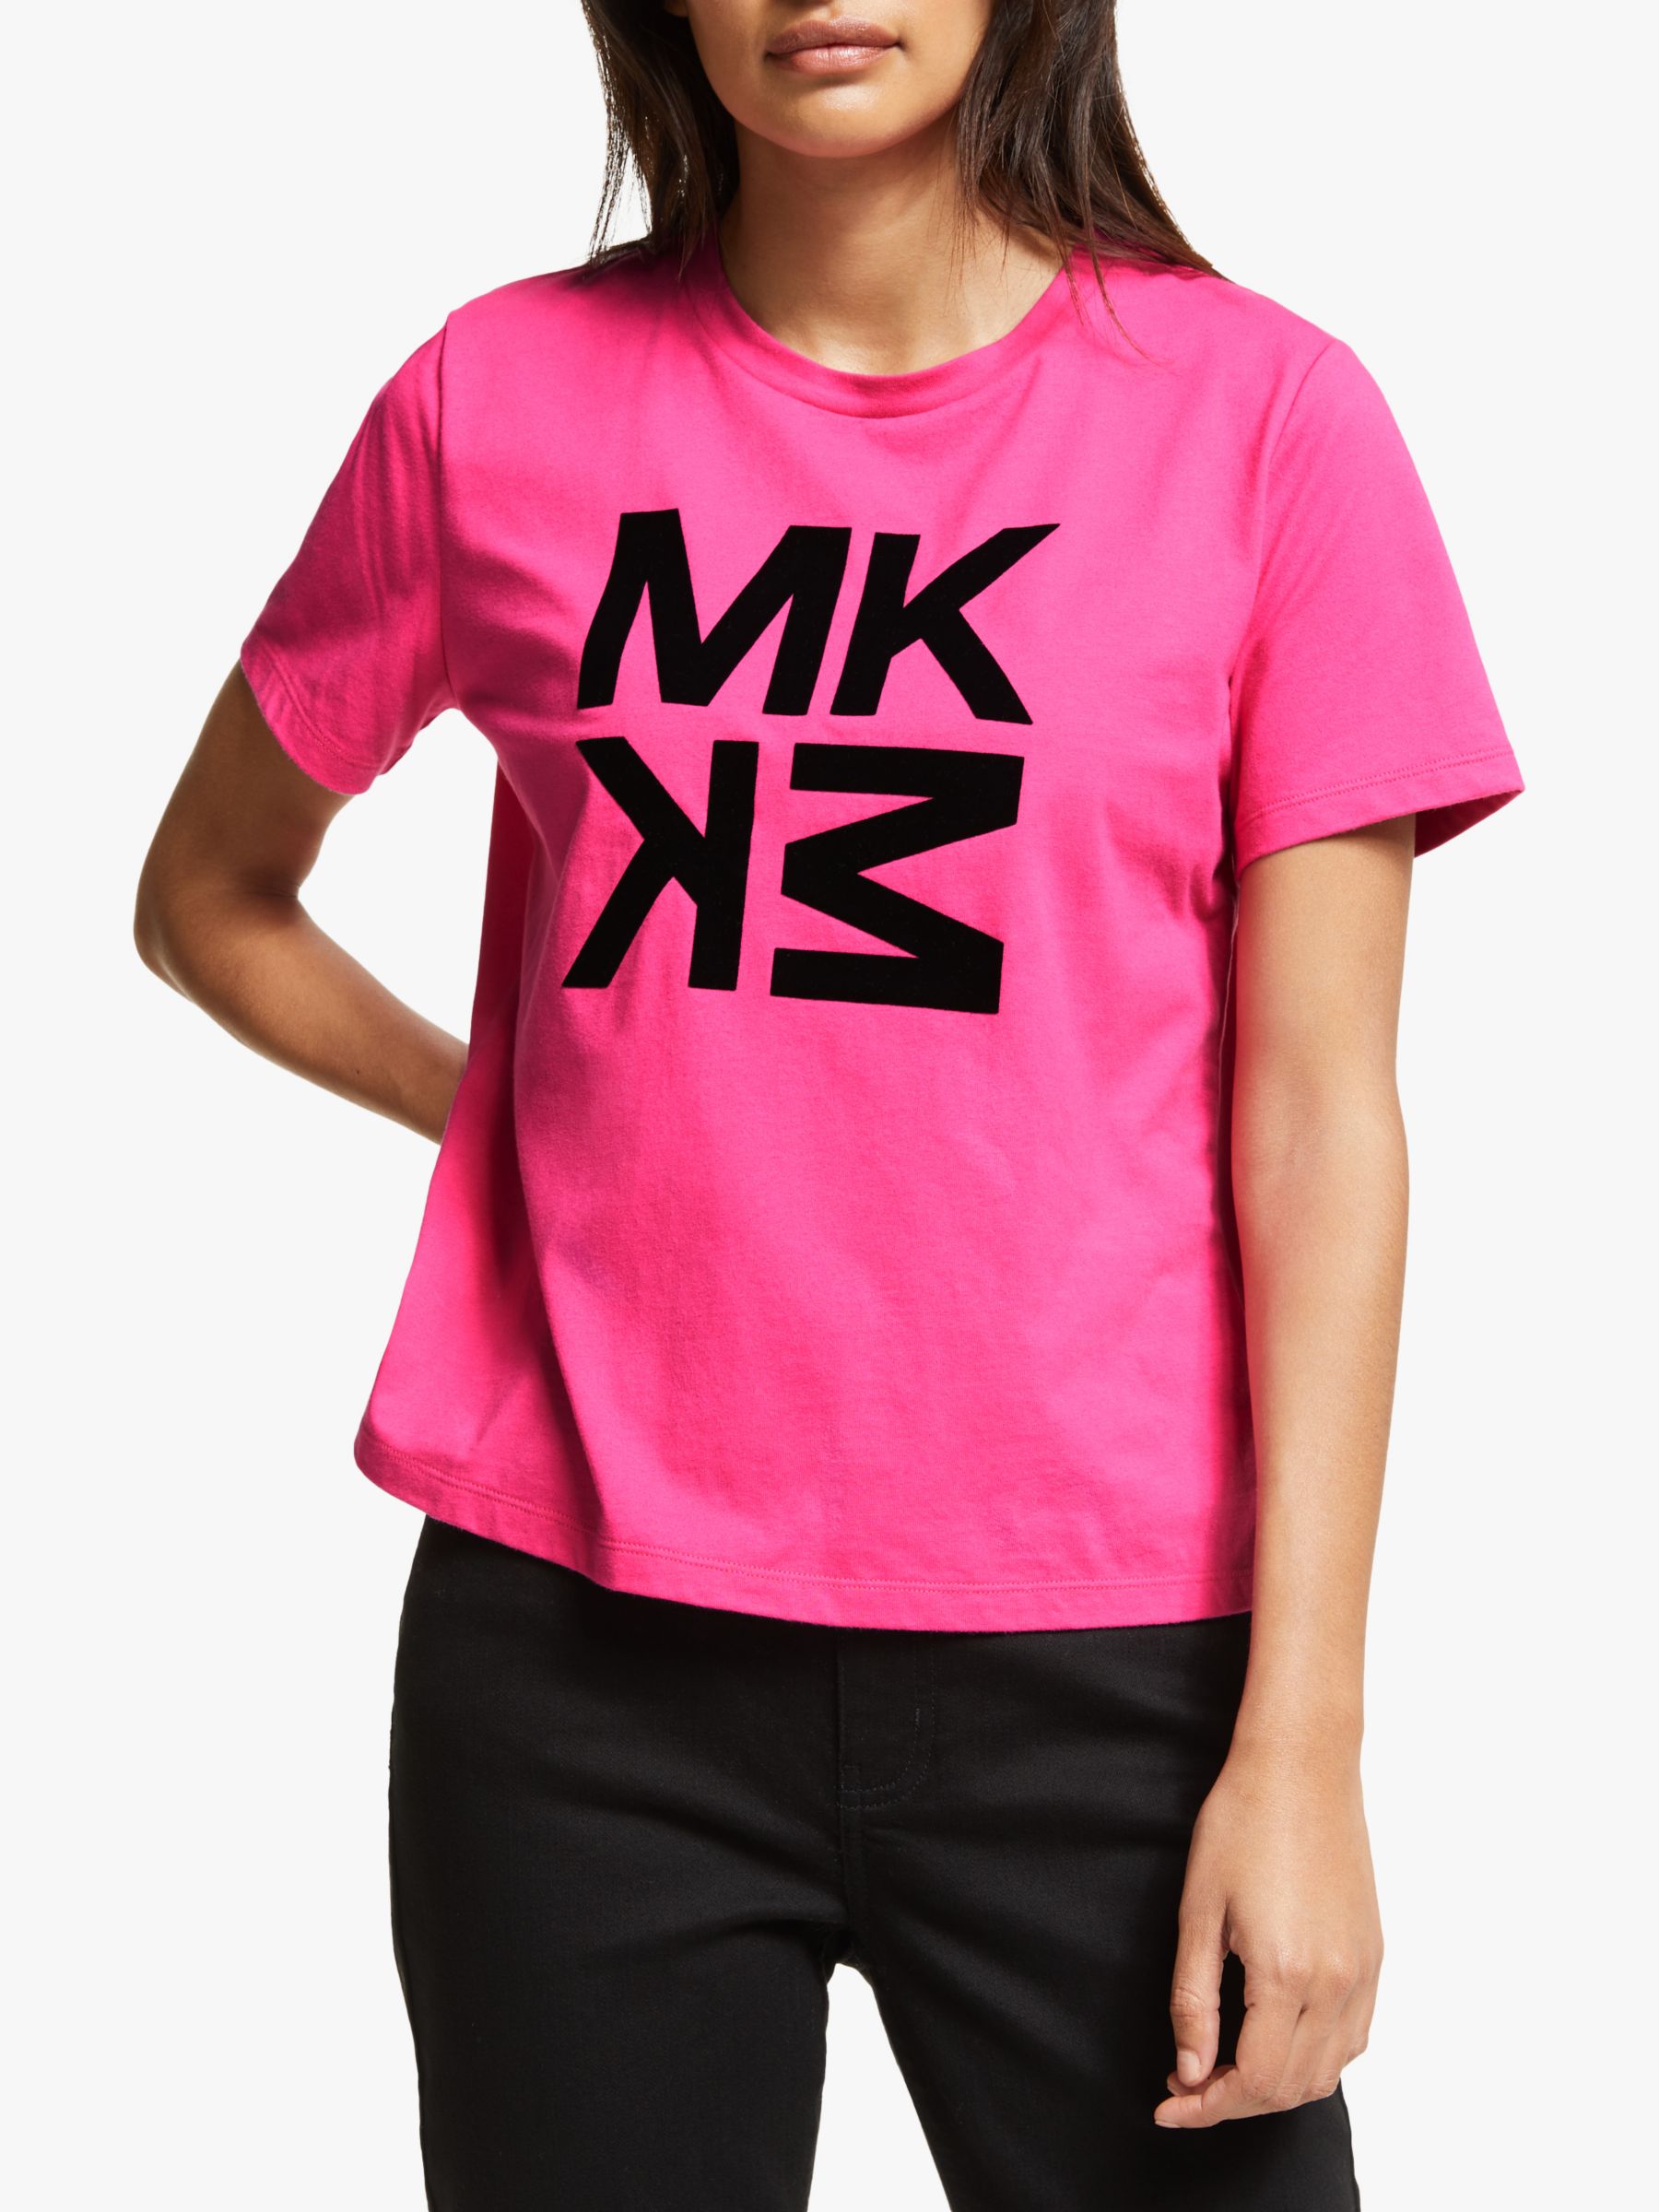 Mk Logo Shirts Top Sellers, UP TO 66% OFF | www.editorialelpirata.com